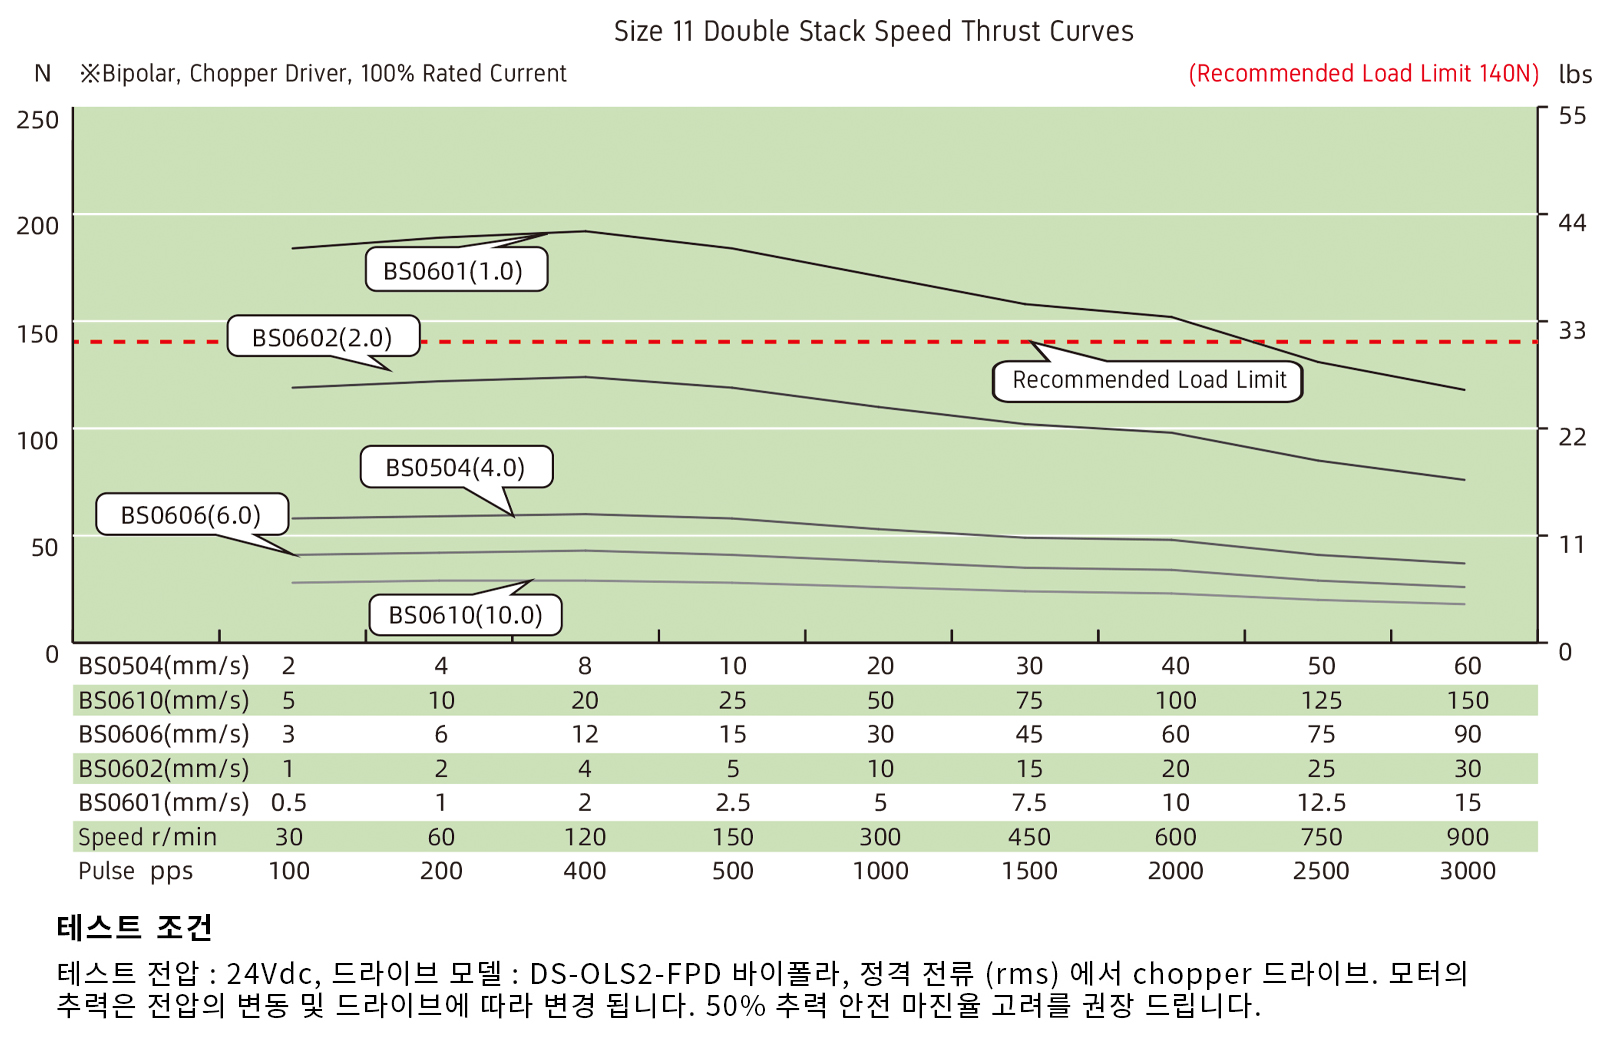 speed thrust curves image